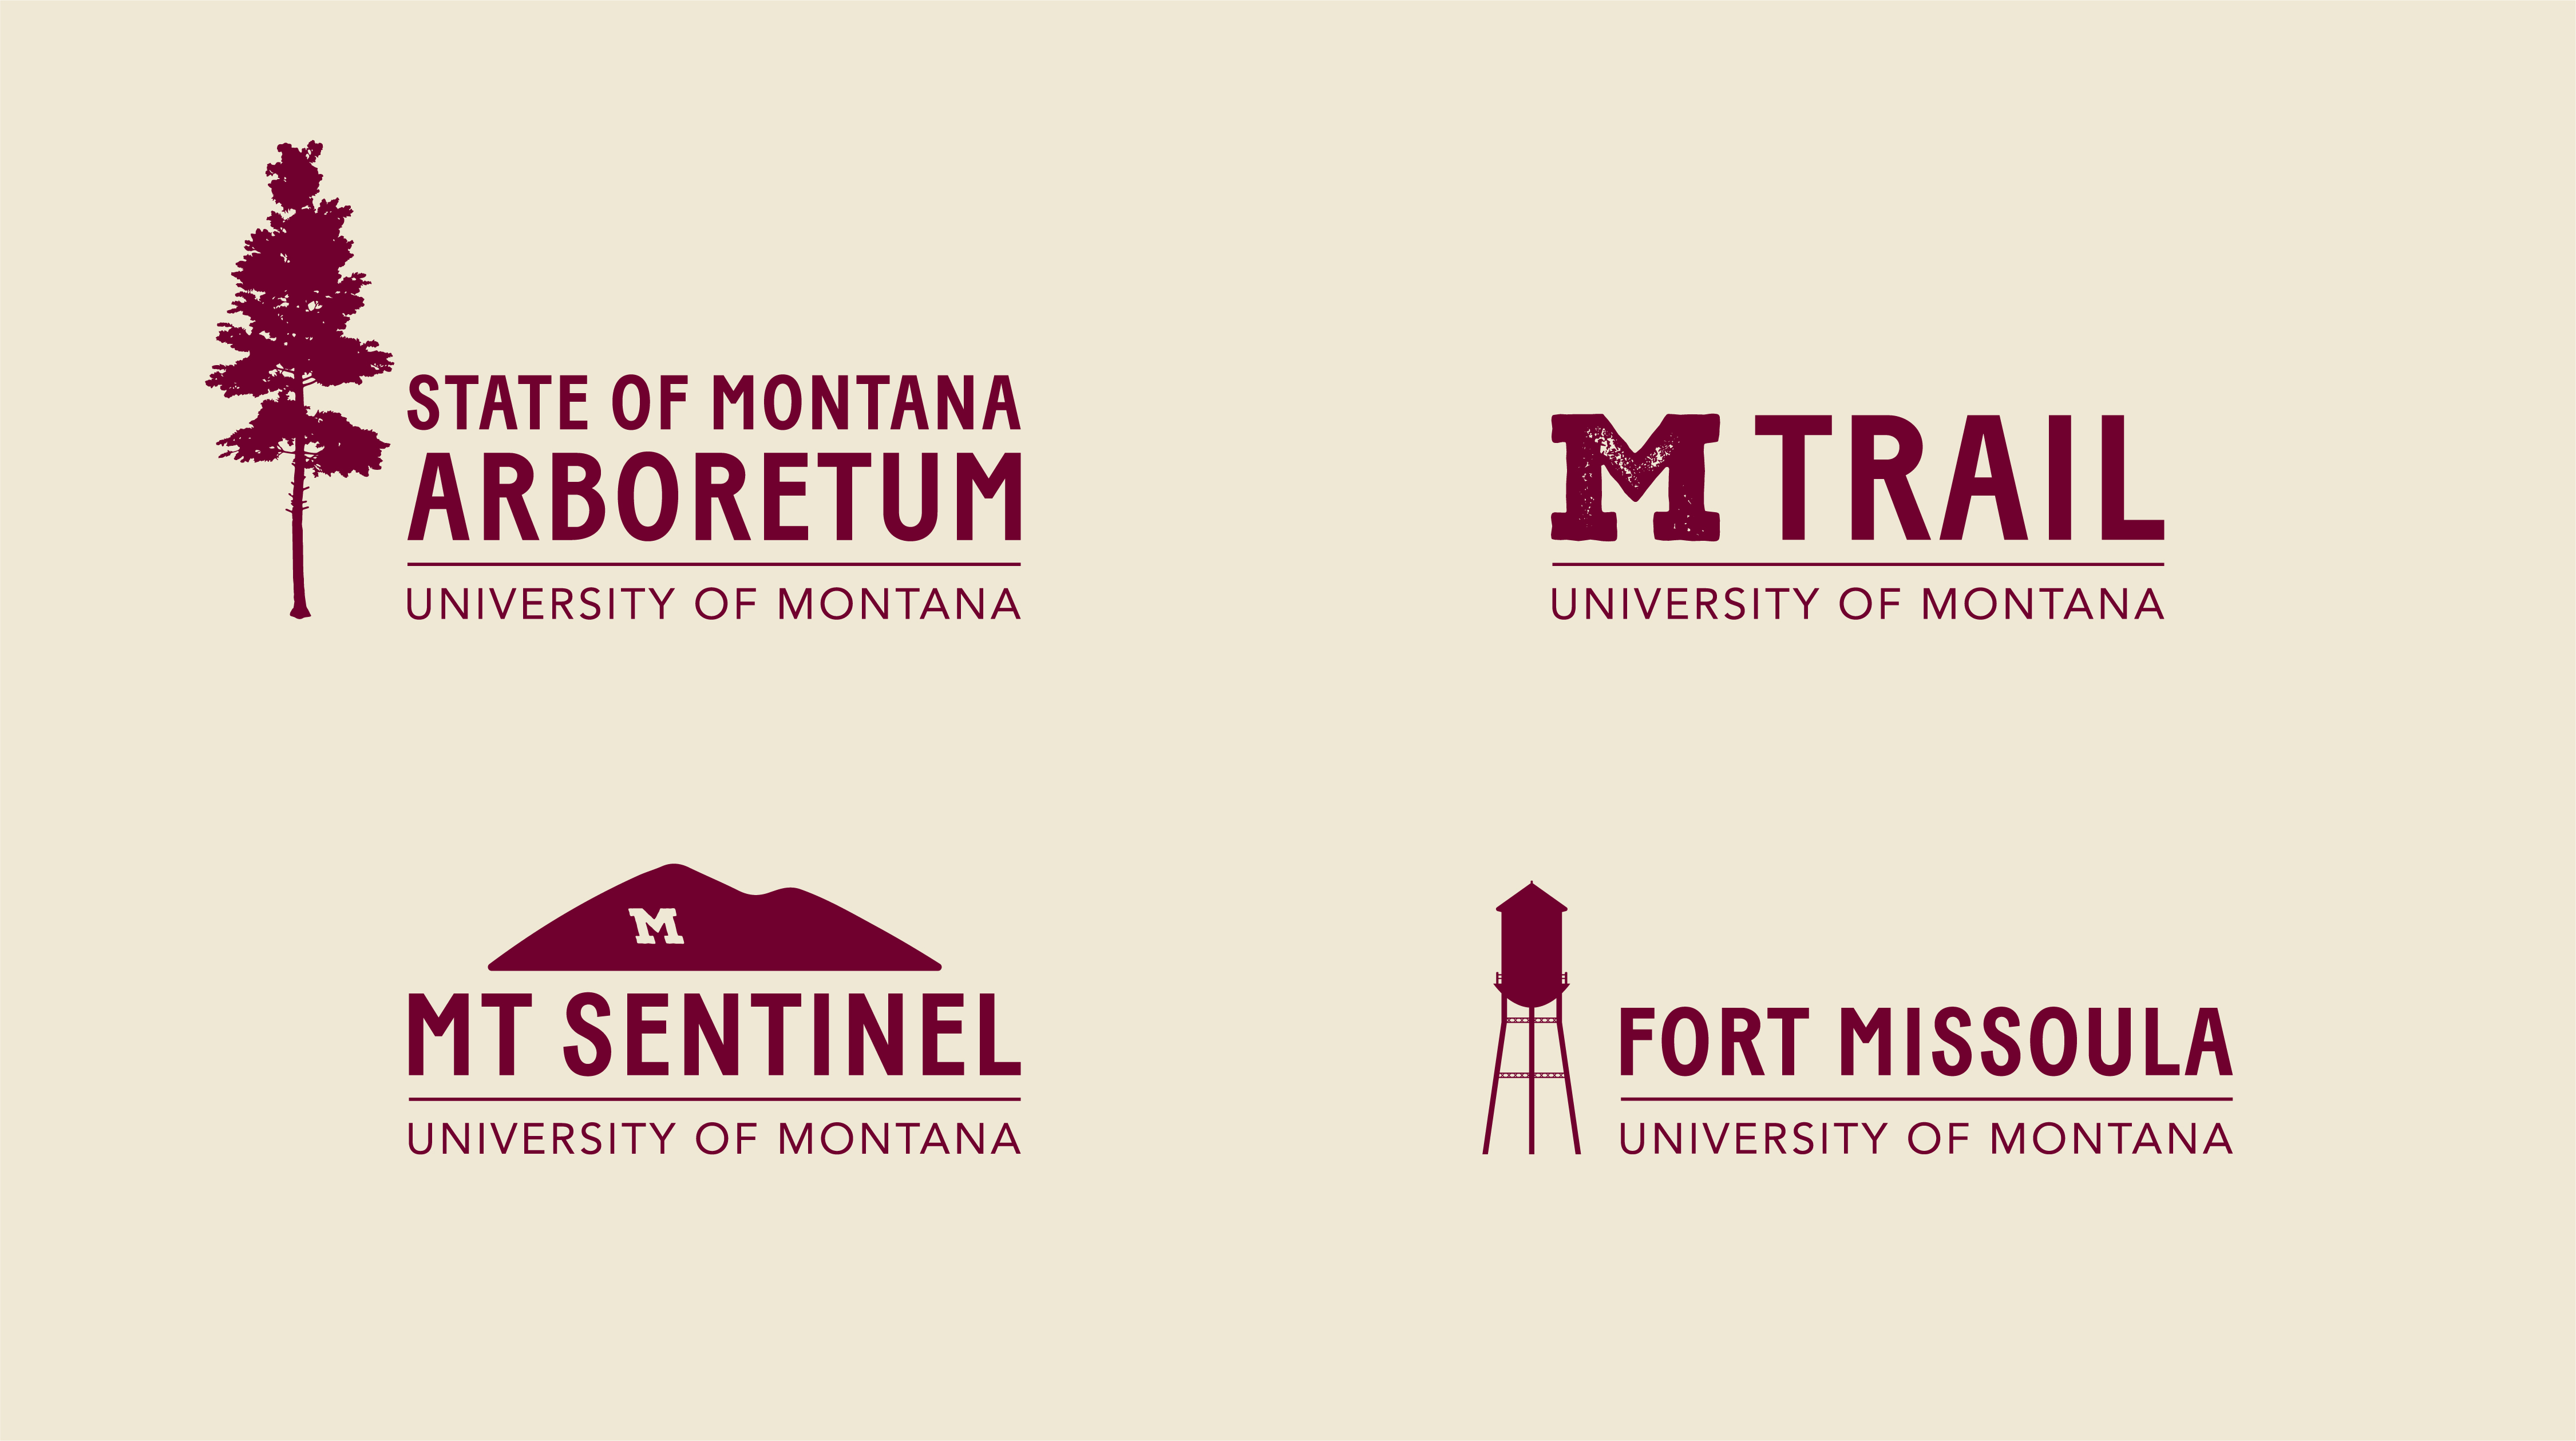 state of montana arboretum, university of Montana, M Trail University of Montana, Mt Sentinel, Fort Missoula